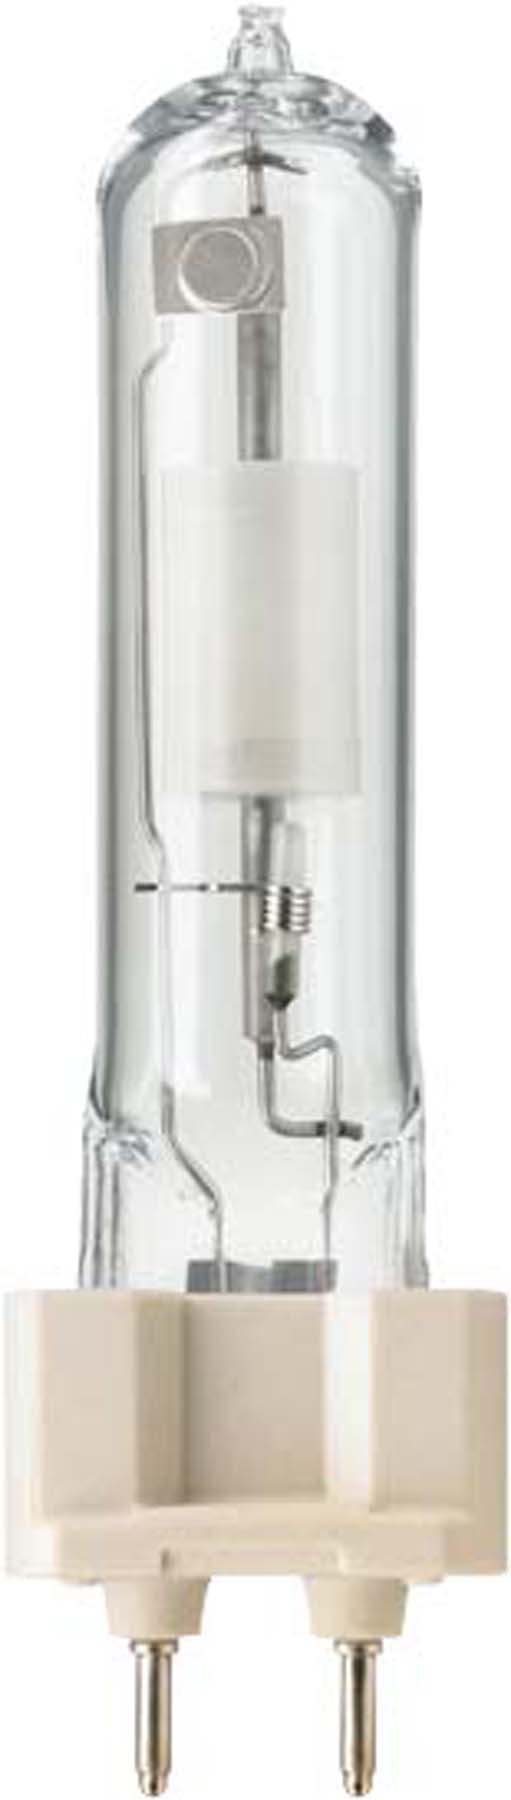 Philips Lighting Entladungslampe 150W G12 CDM-T 150W/942 - 20005115